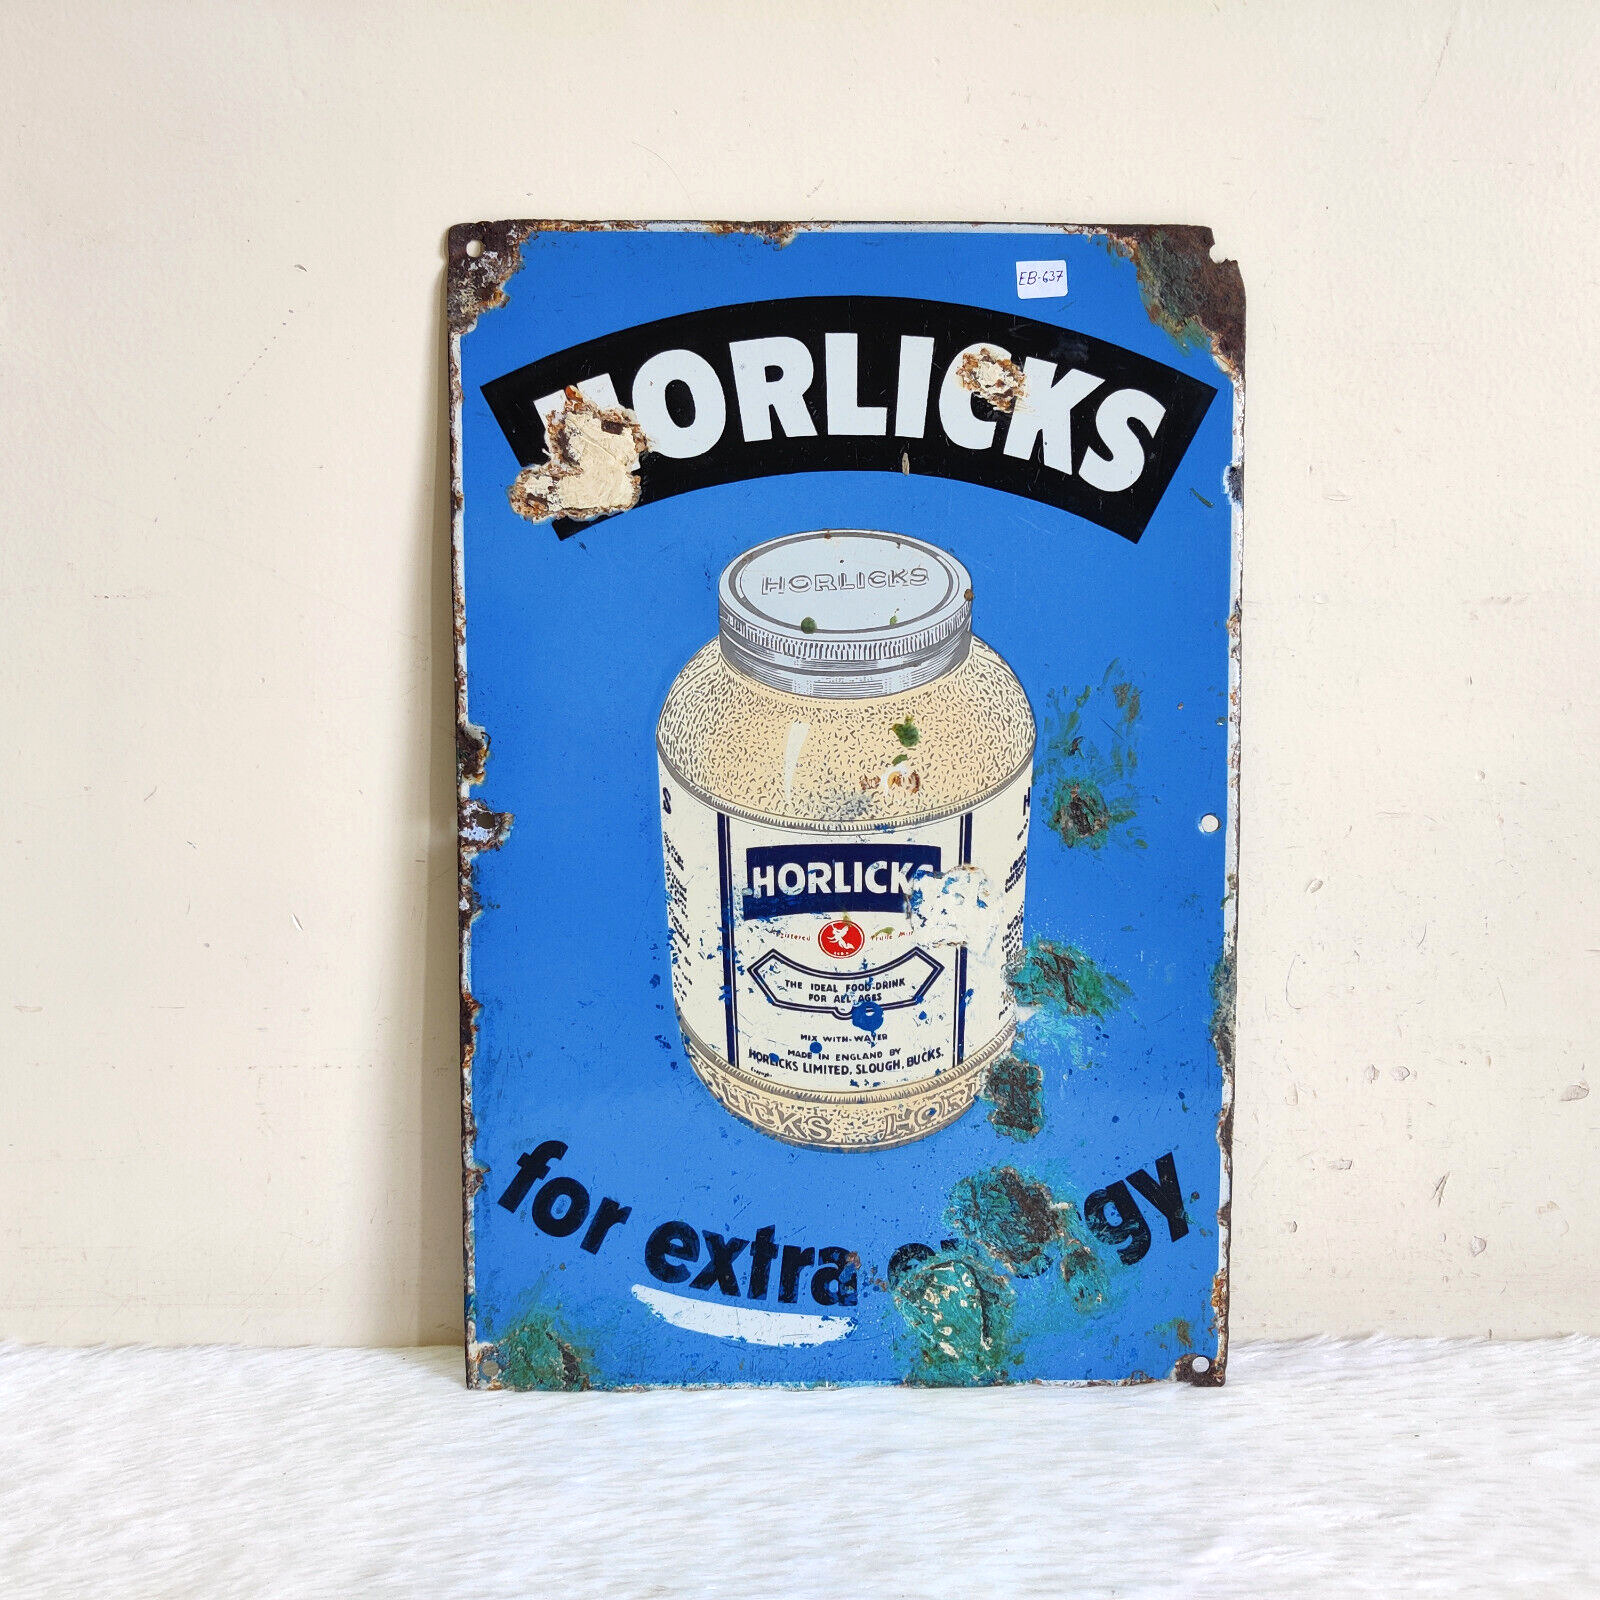 1930s Vintage Horlicks Food Drink Advertising Enamel Sign Board England EB637